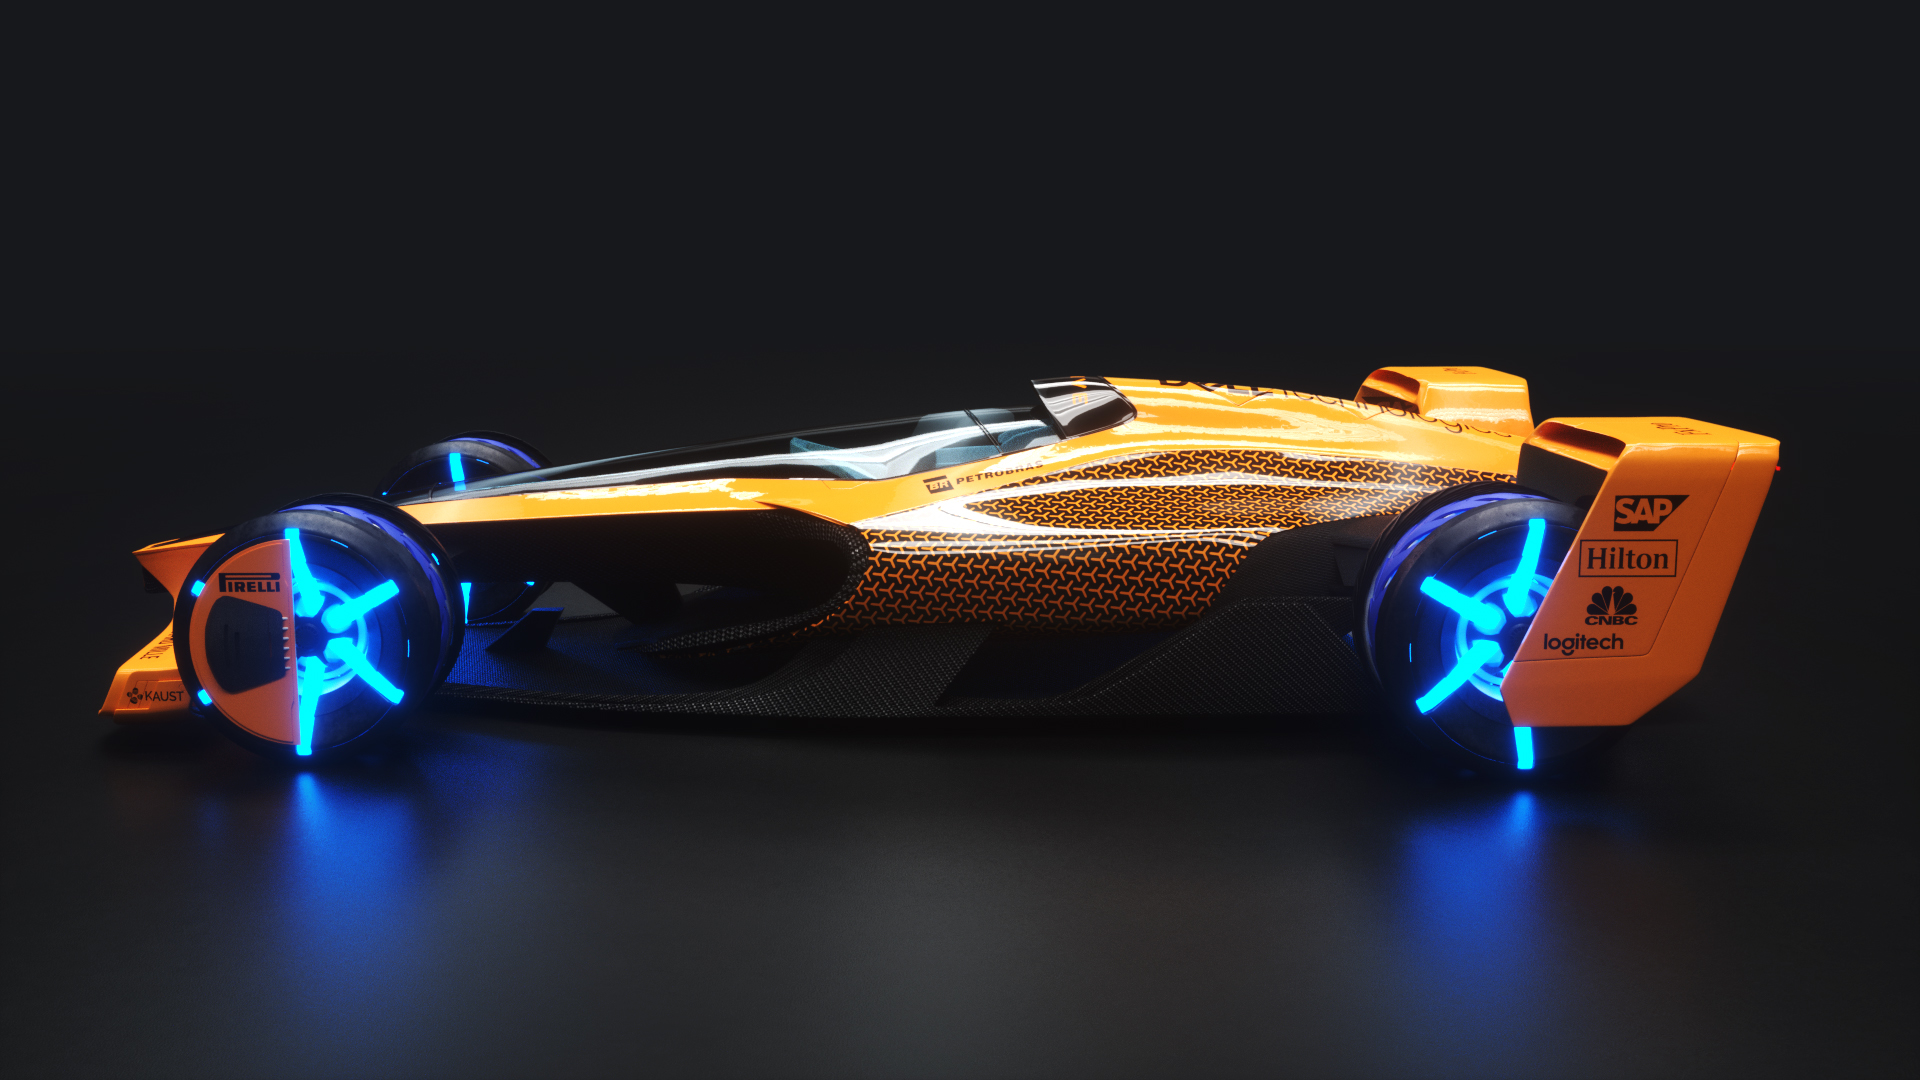 Mclaren Mclextreme 2050 Mclaren Concept Car Design Car